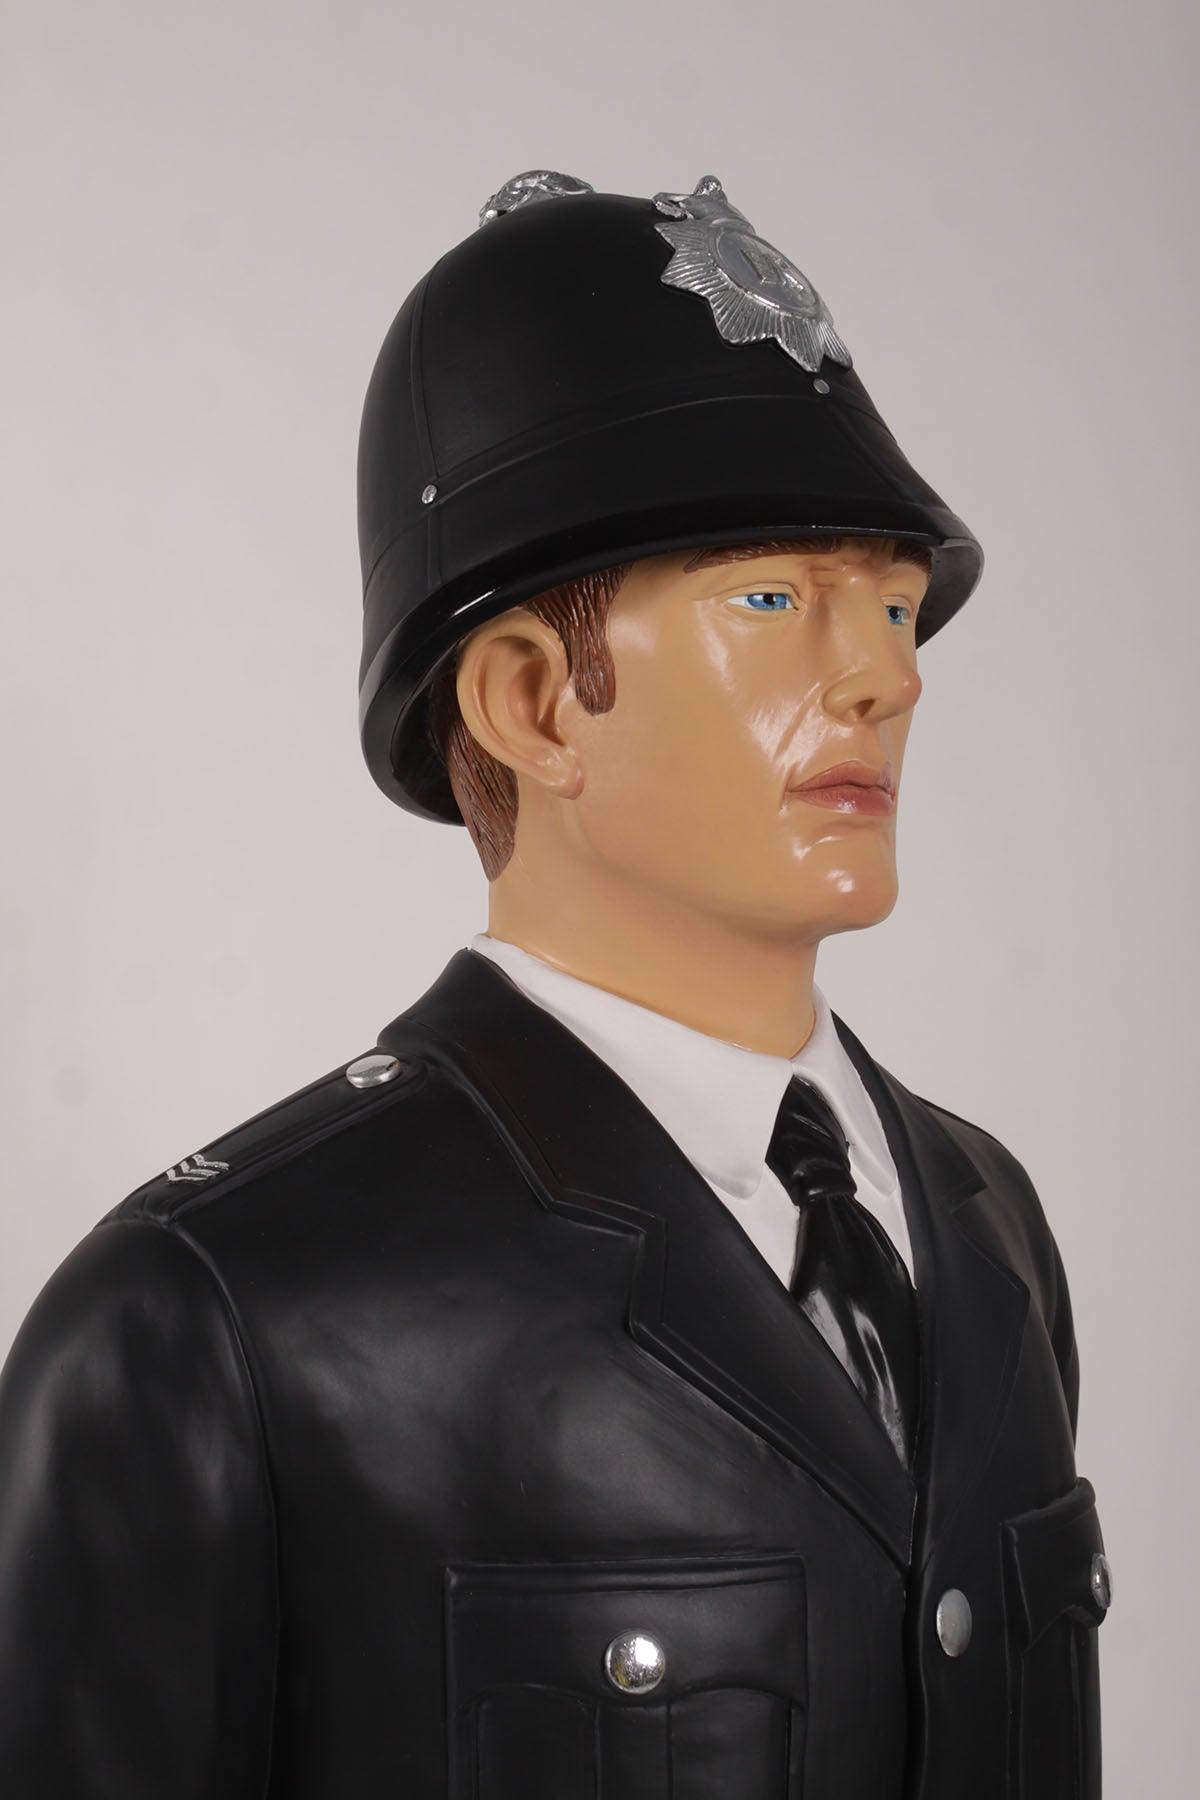 Policeman Bobby Life Size Movie Prop Decor Statue - LM Treasures Prop Rentals 